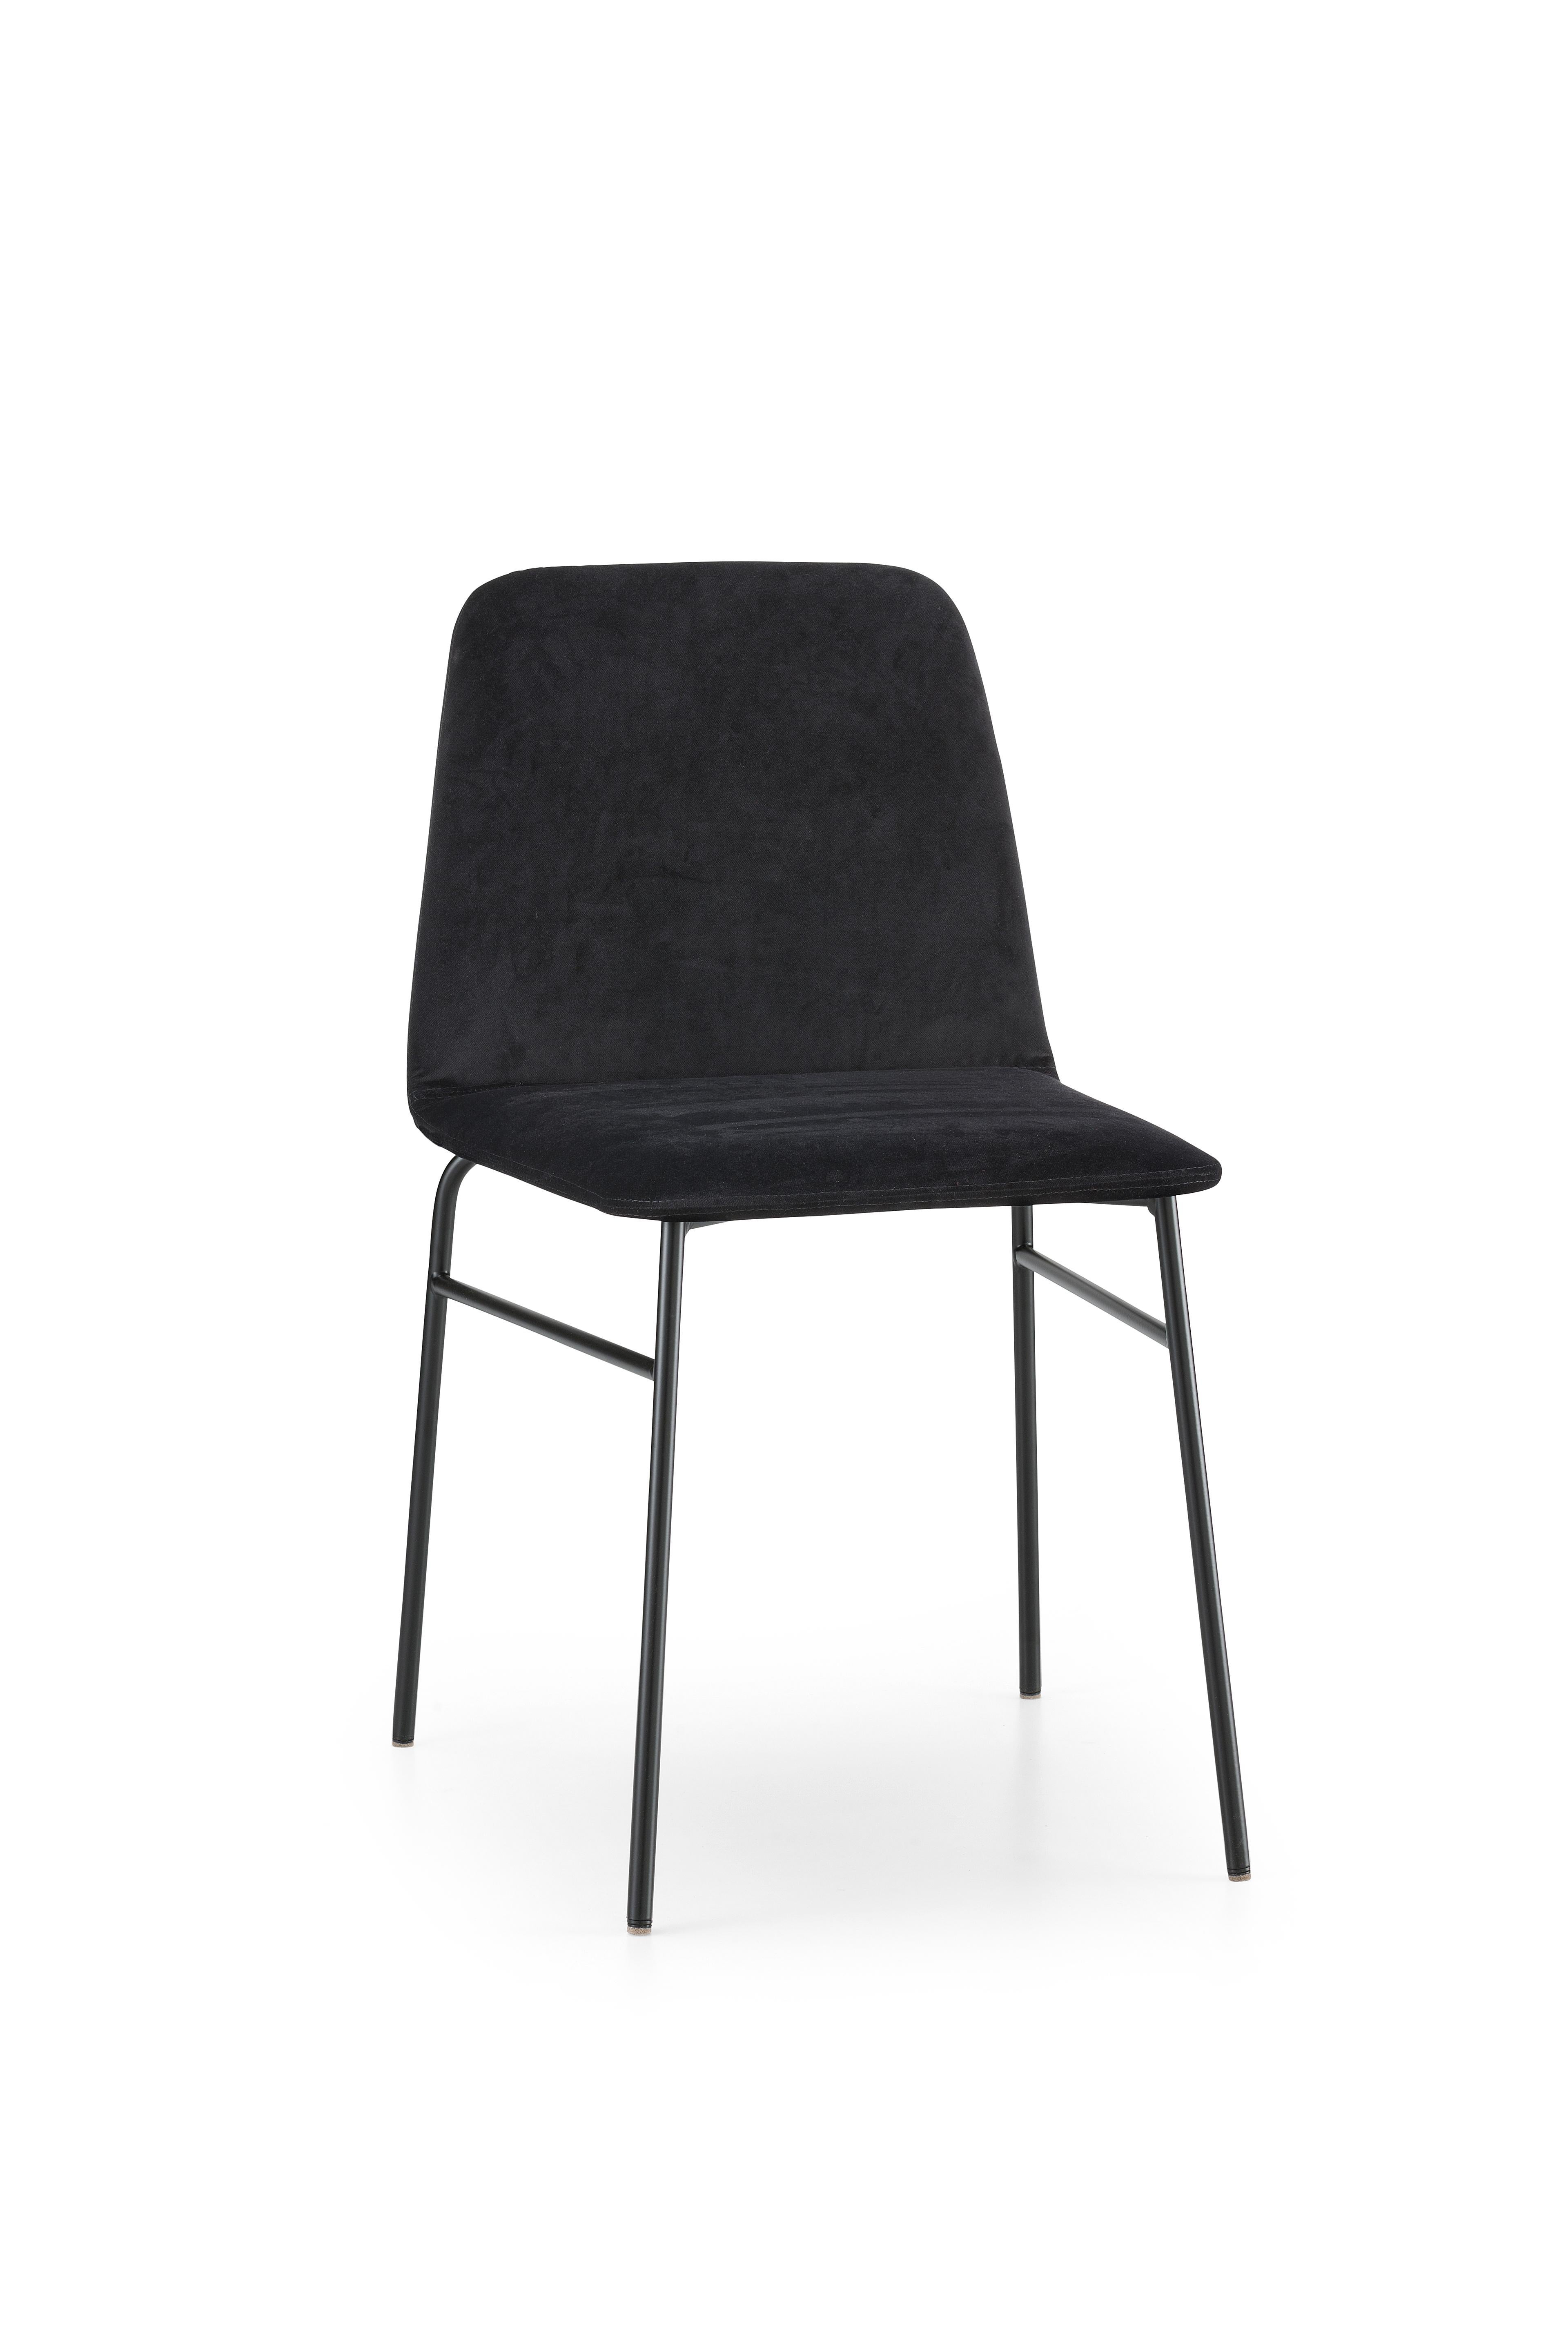 Italian Bardot Chair Met, Fabric, Metal, Black, Red, Green Modern by Emilio Nanni For Sale